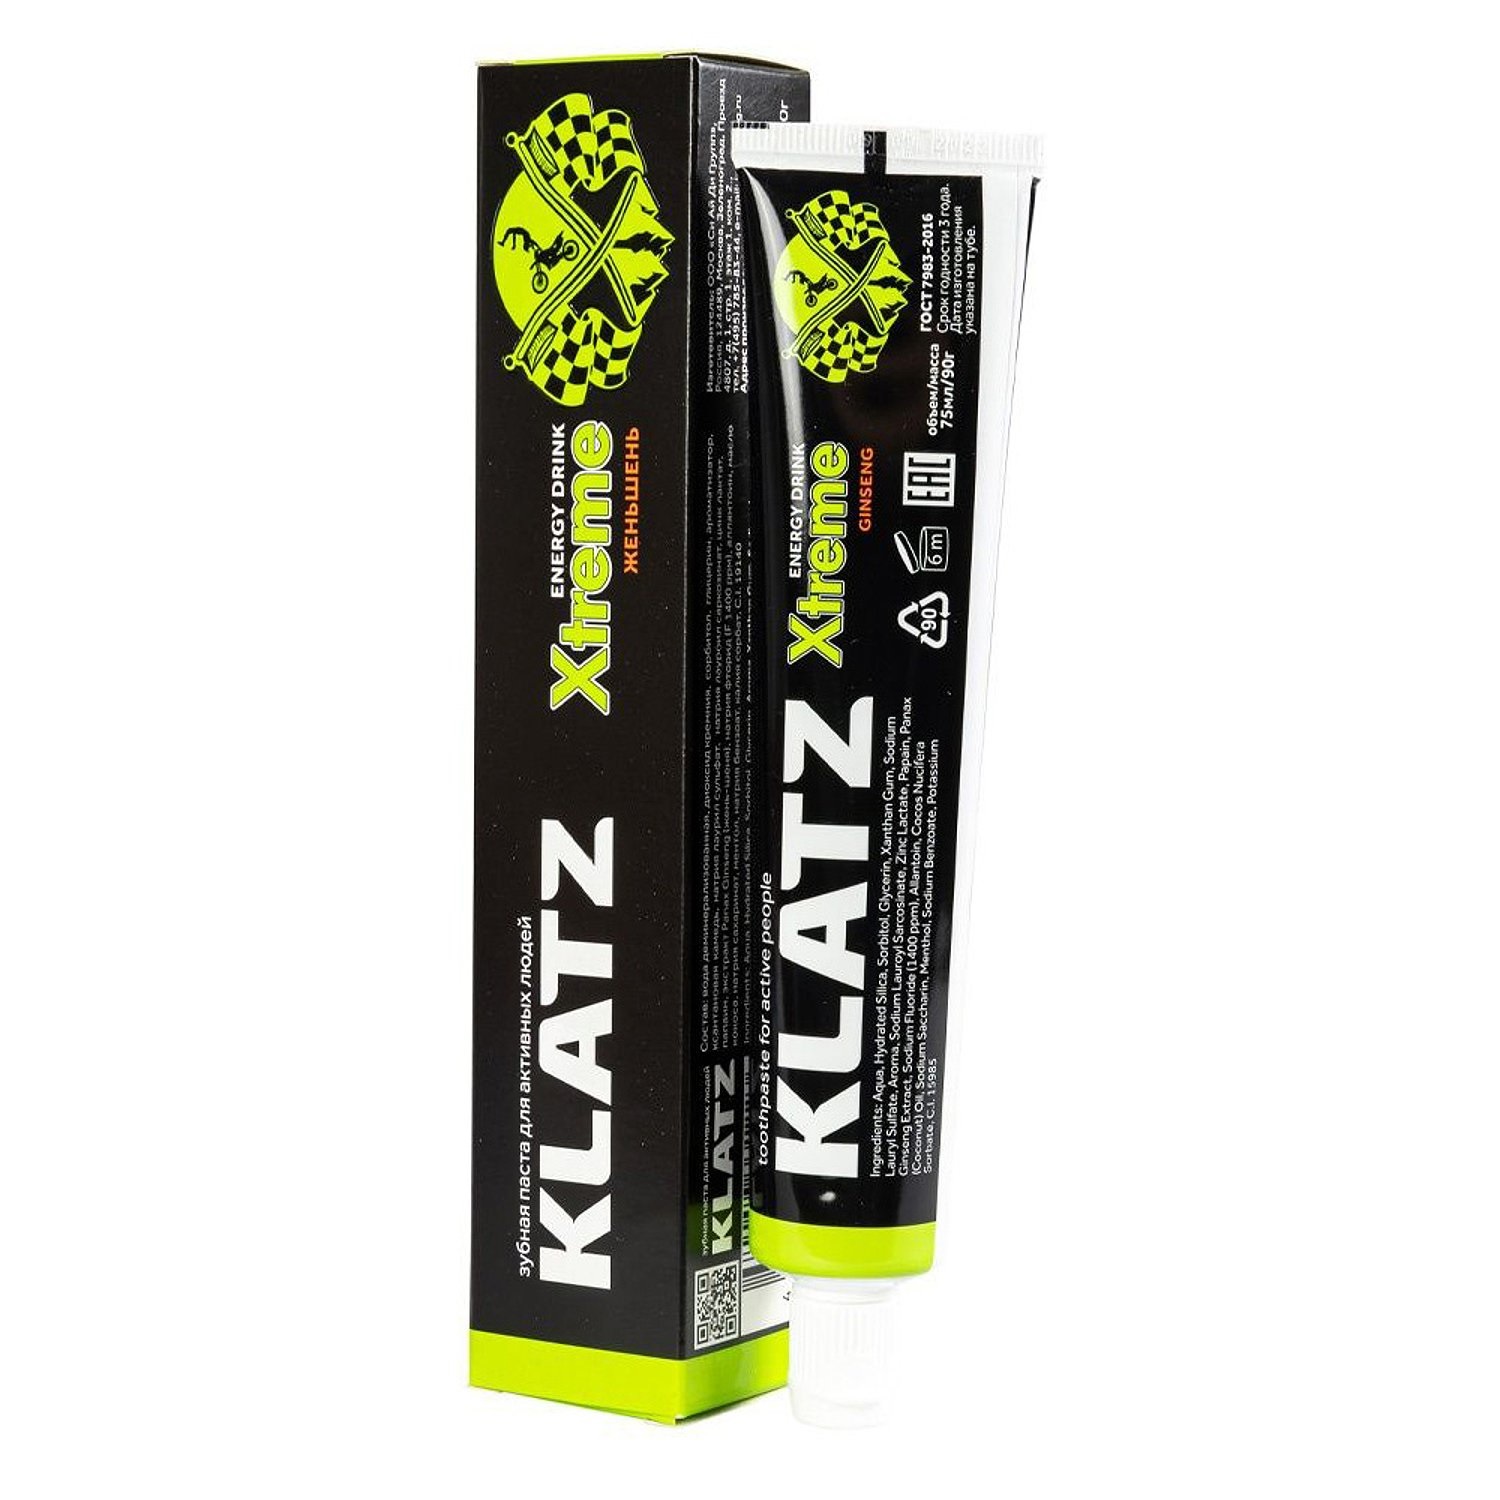 Зубная паста KLATZ X-treme Energy Drink для активных людей, женьшень, 75 мл зубная паста для активных людей klatz x treme energy drink гуарана 75мл